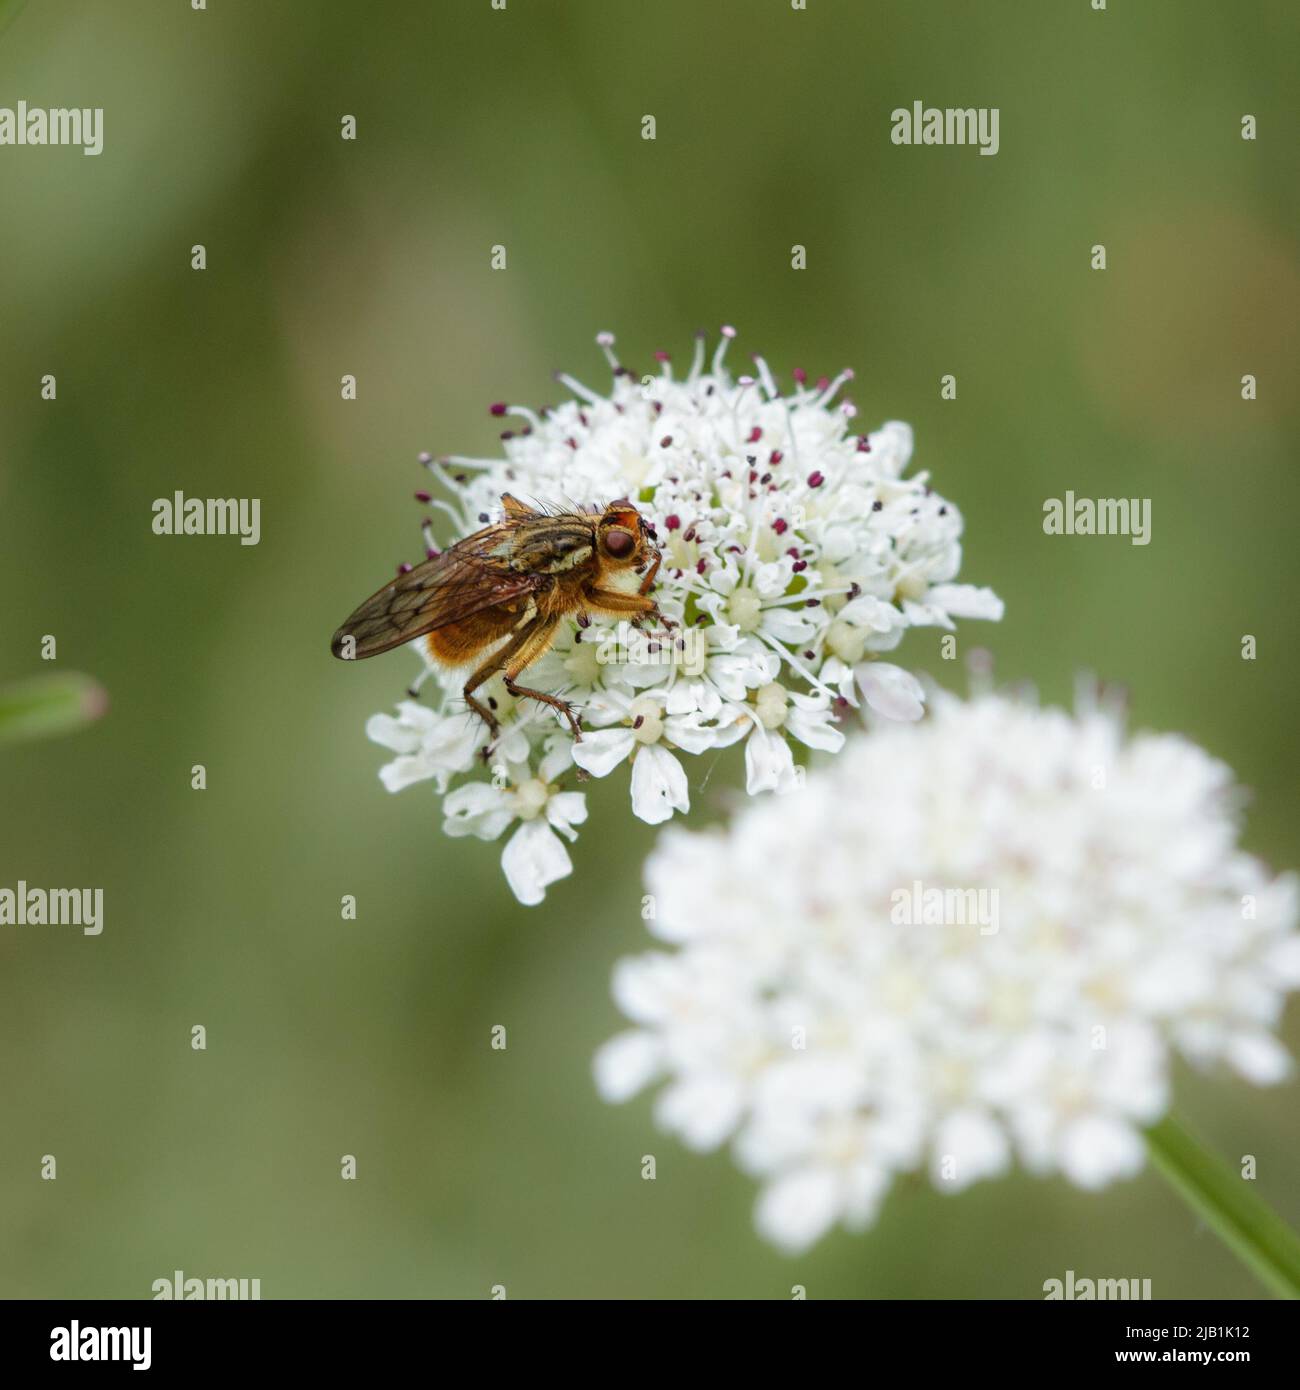 Hover fly (Syrphidae) settled on Pignut (Conopodium majus) umbel. Image in dominant shades of green. Stock Photo